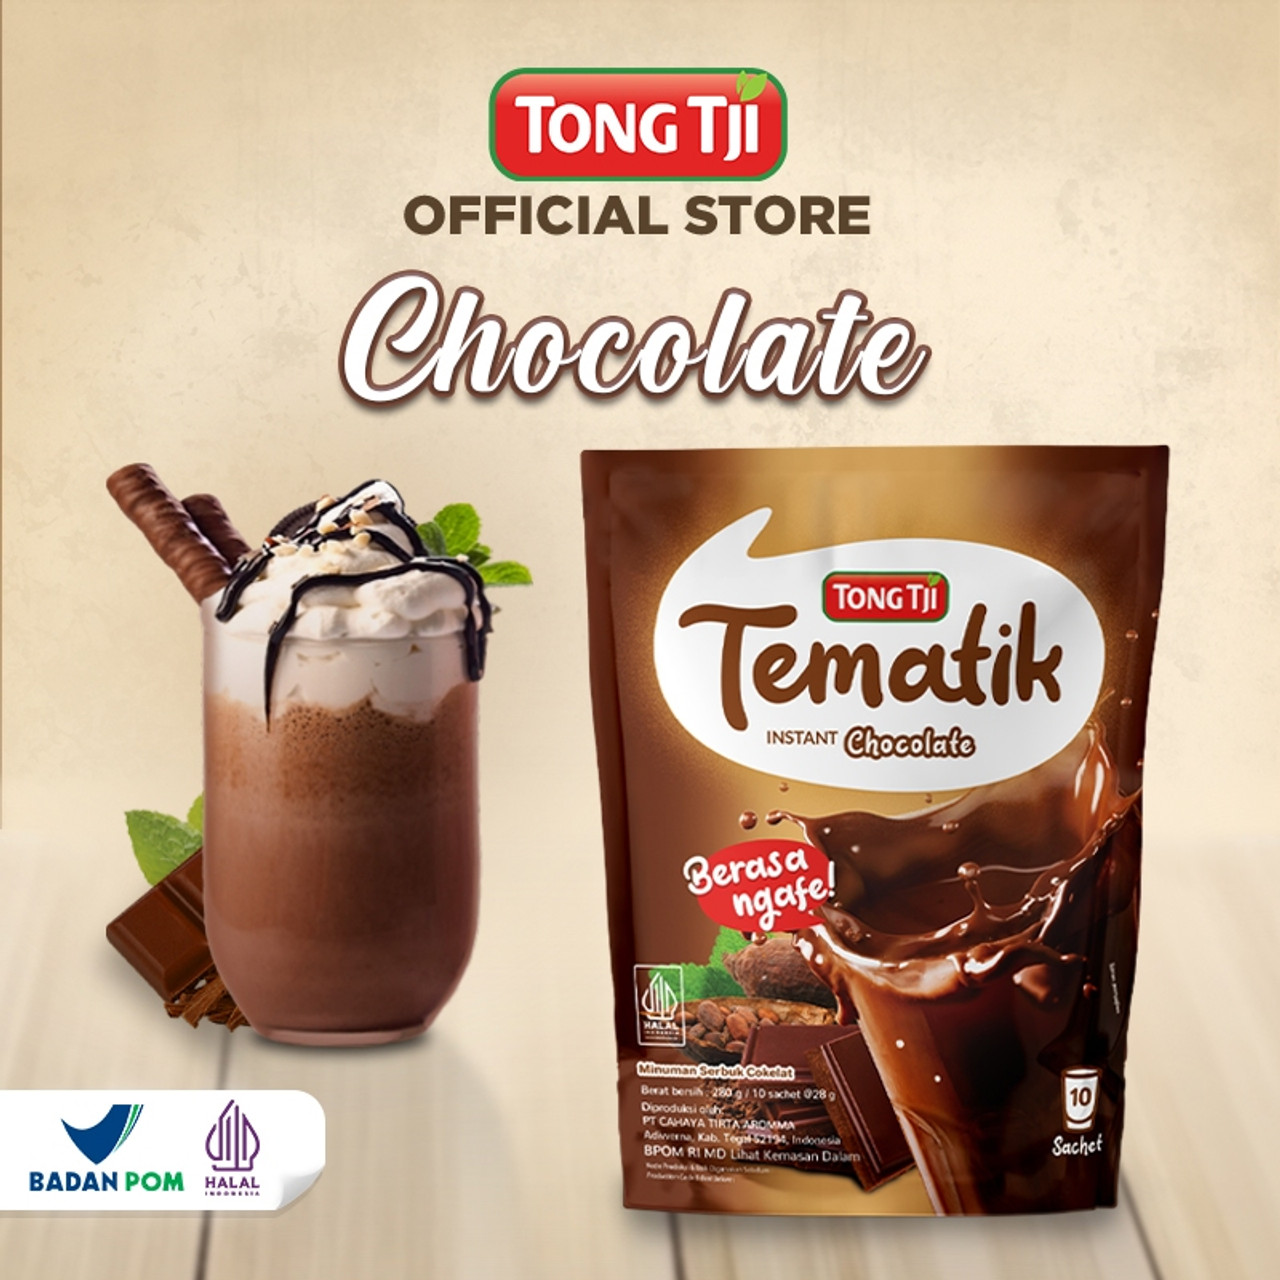 Tong Tji Tematik Instant Chocolate 10 sachet